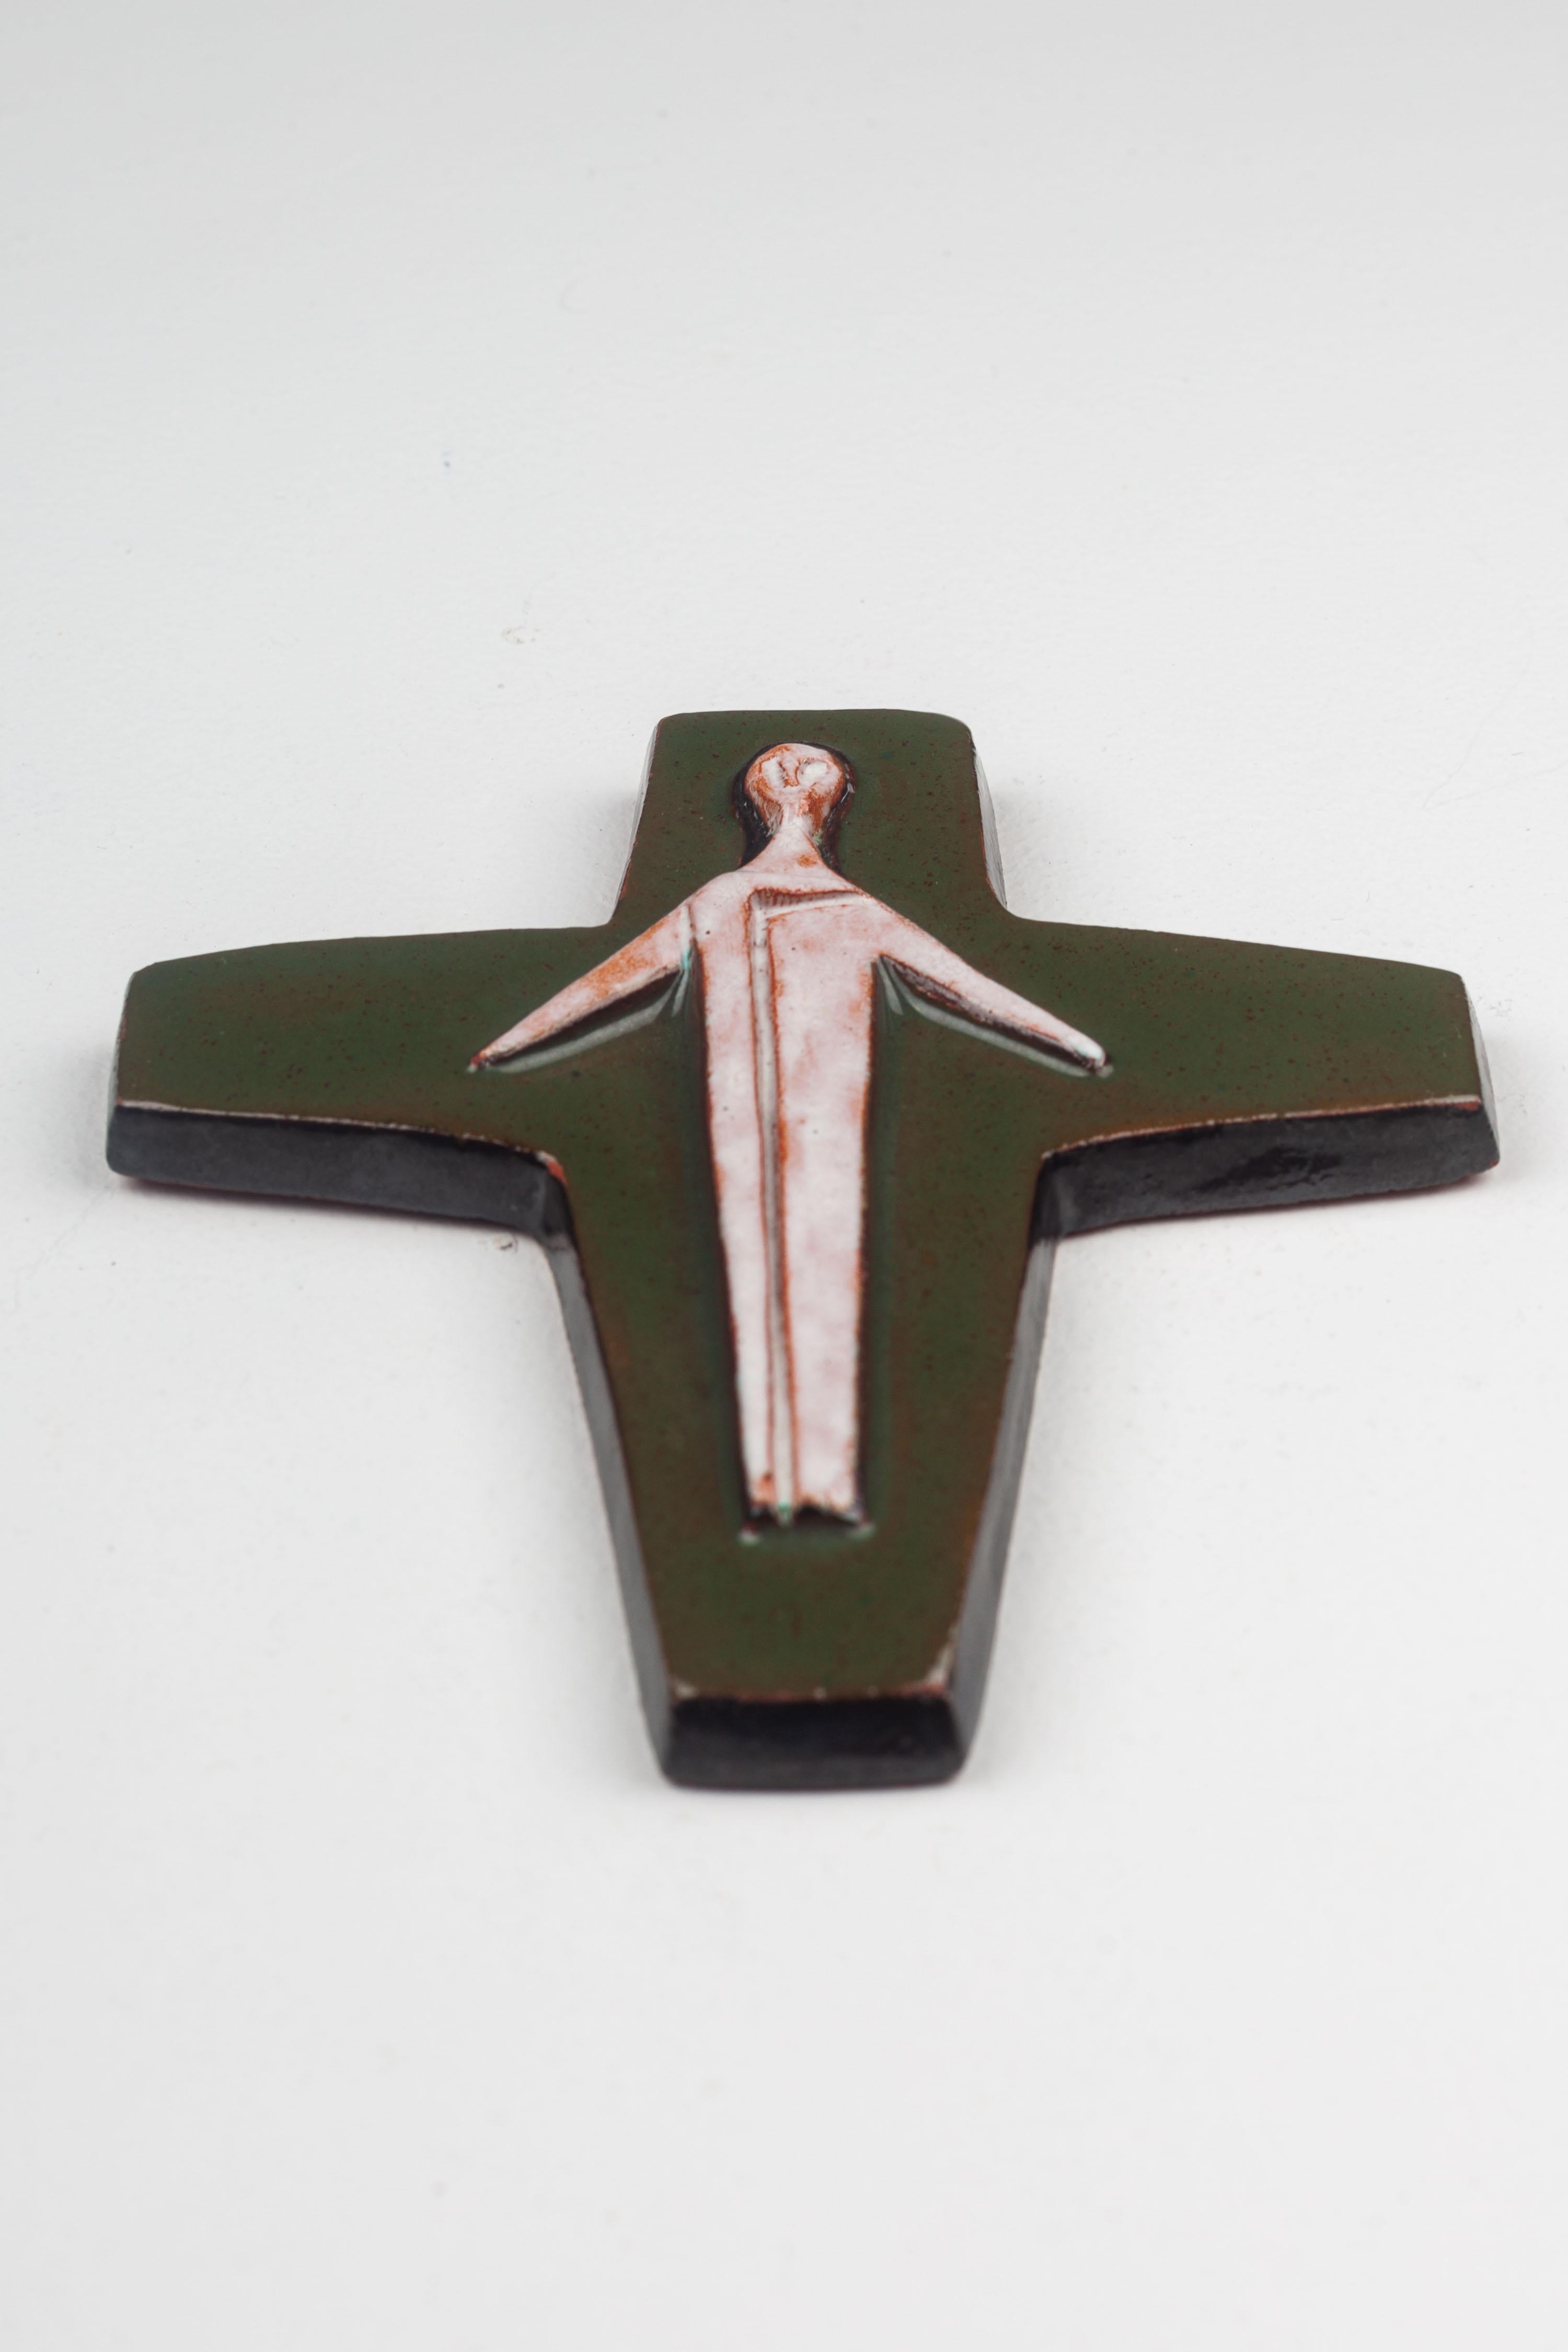 Midcentury European Glossy Ceramic Cross - Otherworldly Christ Figure For Sale 5